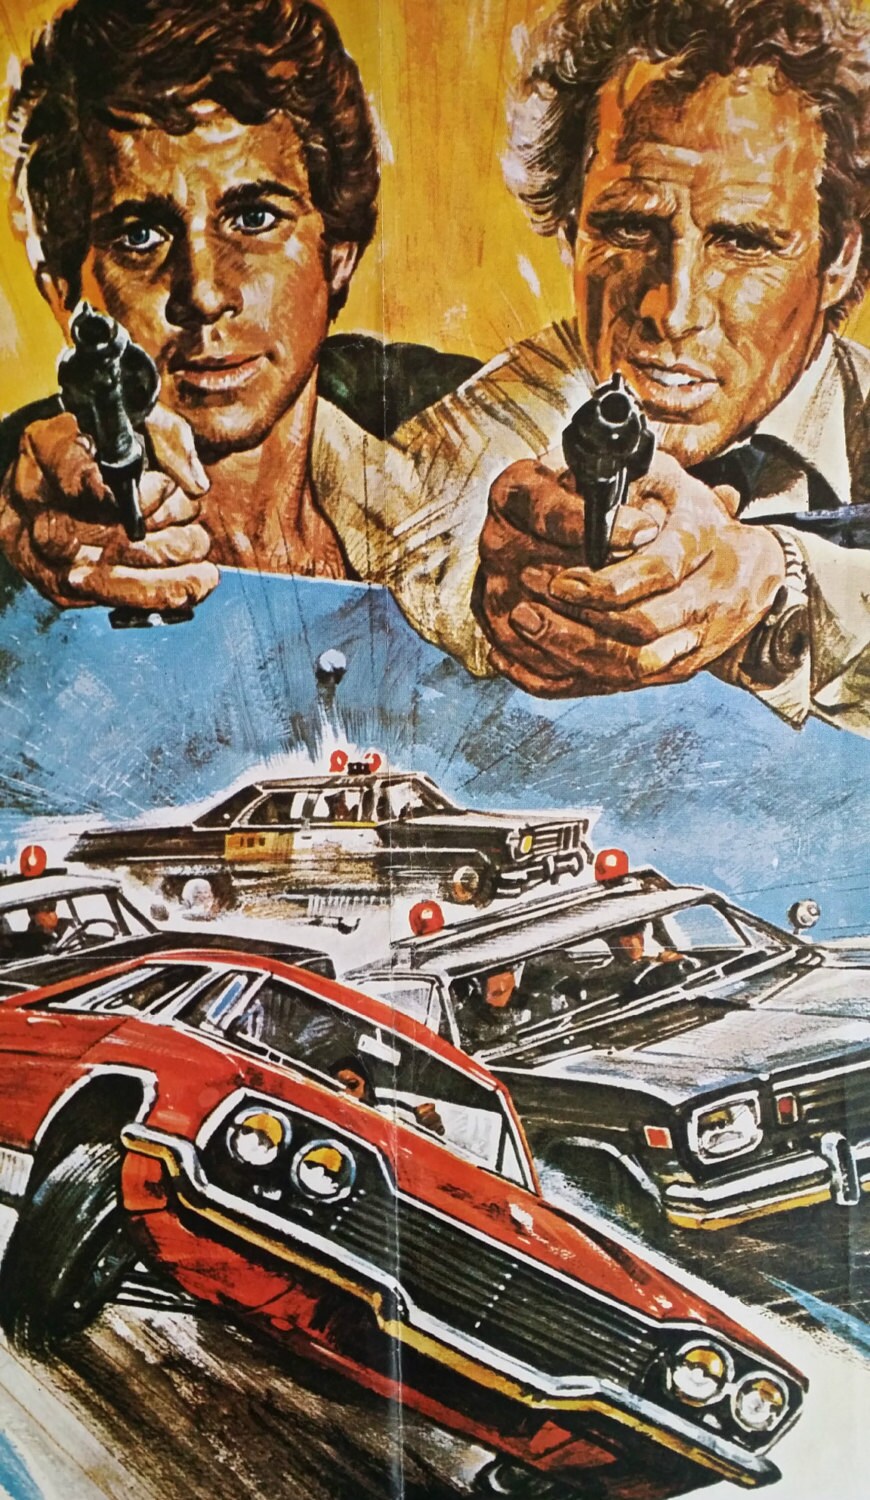 1979 "The Driver" Movie Poster - Original Vintage Poster